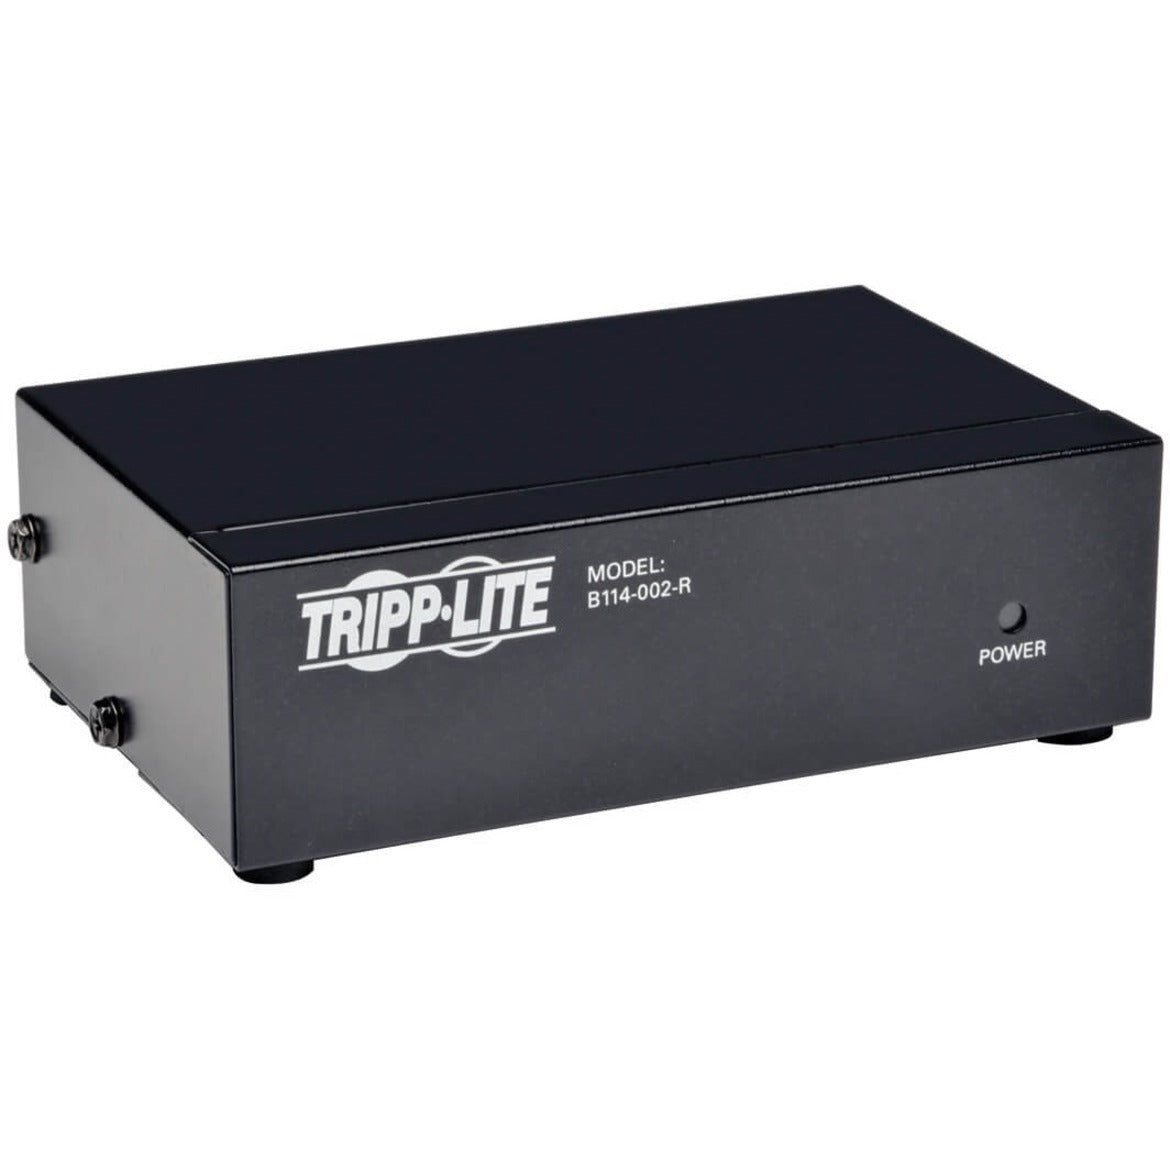 Tripp Lite B114-002-R 二ポート VGA/SVGA ビデオスプリッター、HD15、ブラック、最大ビデオバンド幅350 MHz ブランド： Tripp Lite ブランド名の日本語訳： トリップ ライト